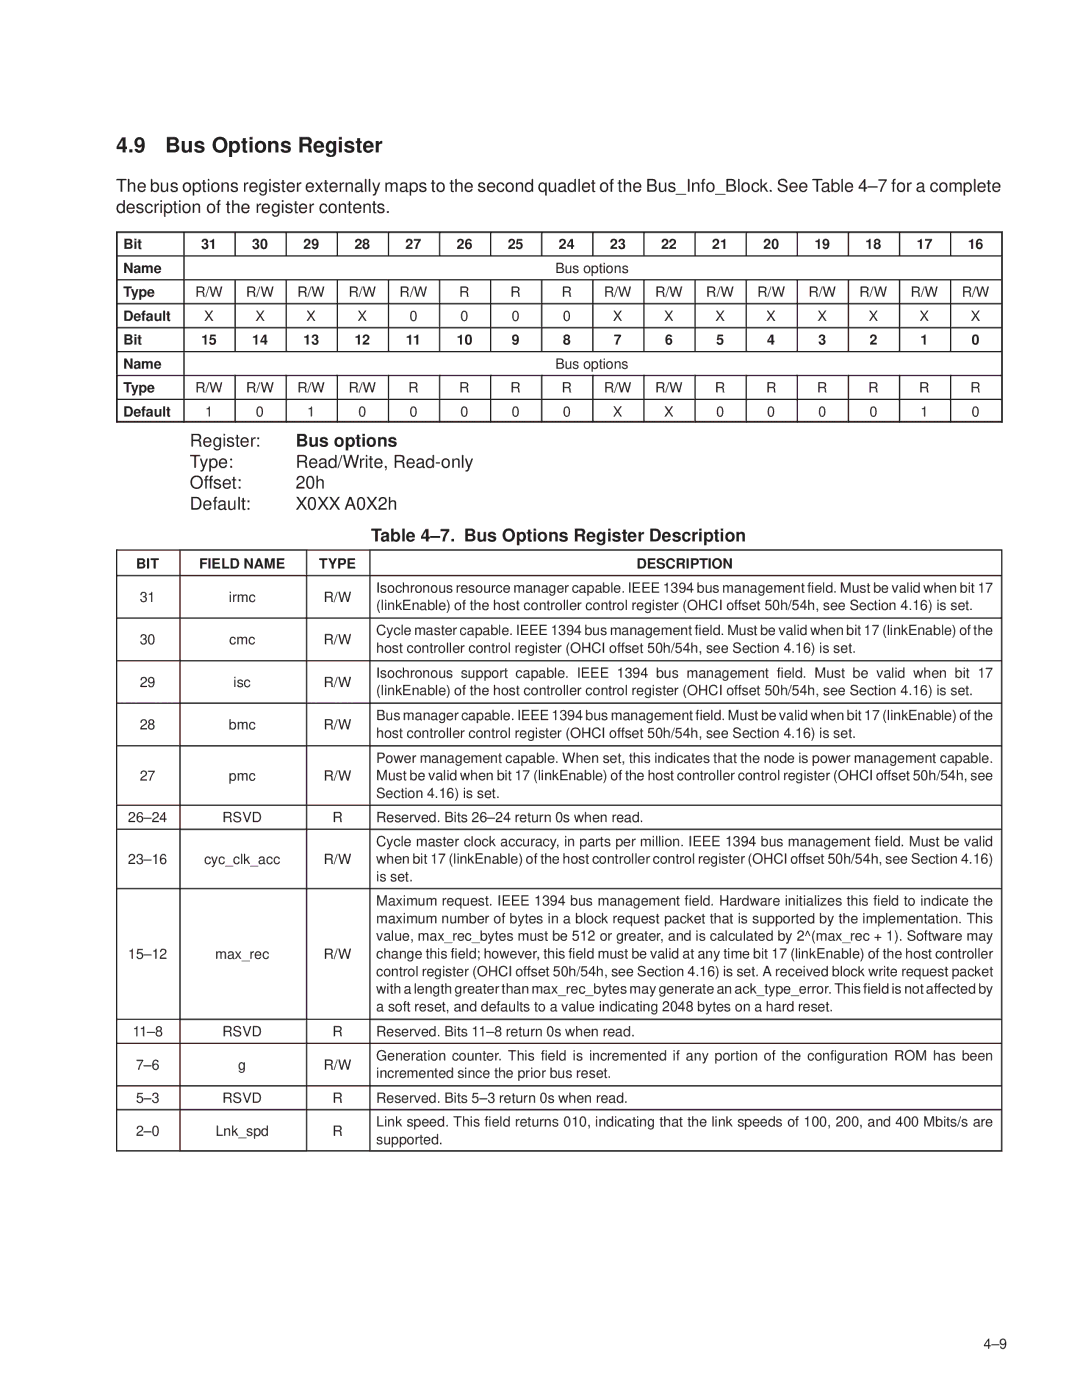 Texas Instruments TSB12LV26 manual Bus options, ±7. Bus Options Register Description 